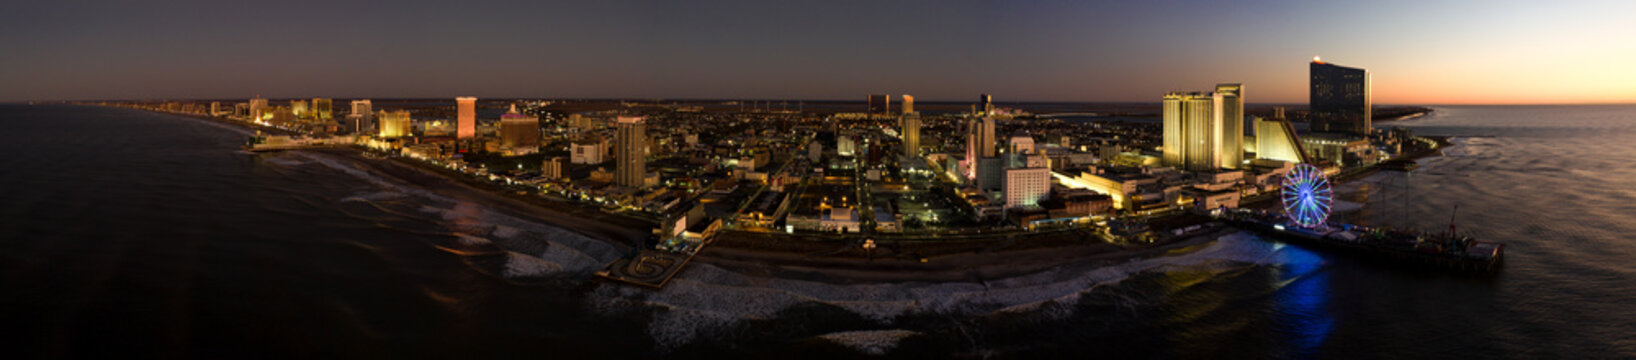 Drone view on Atlantic City